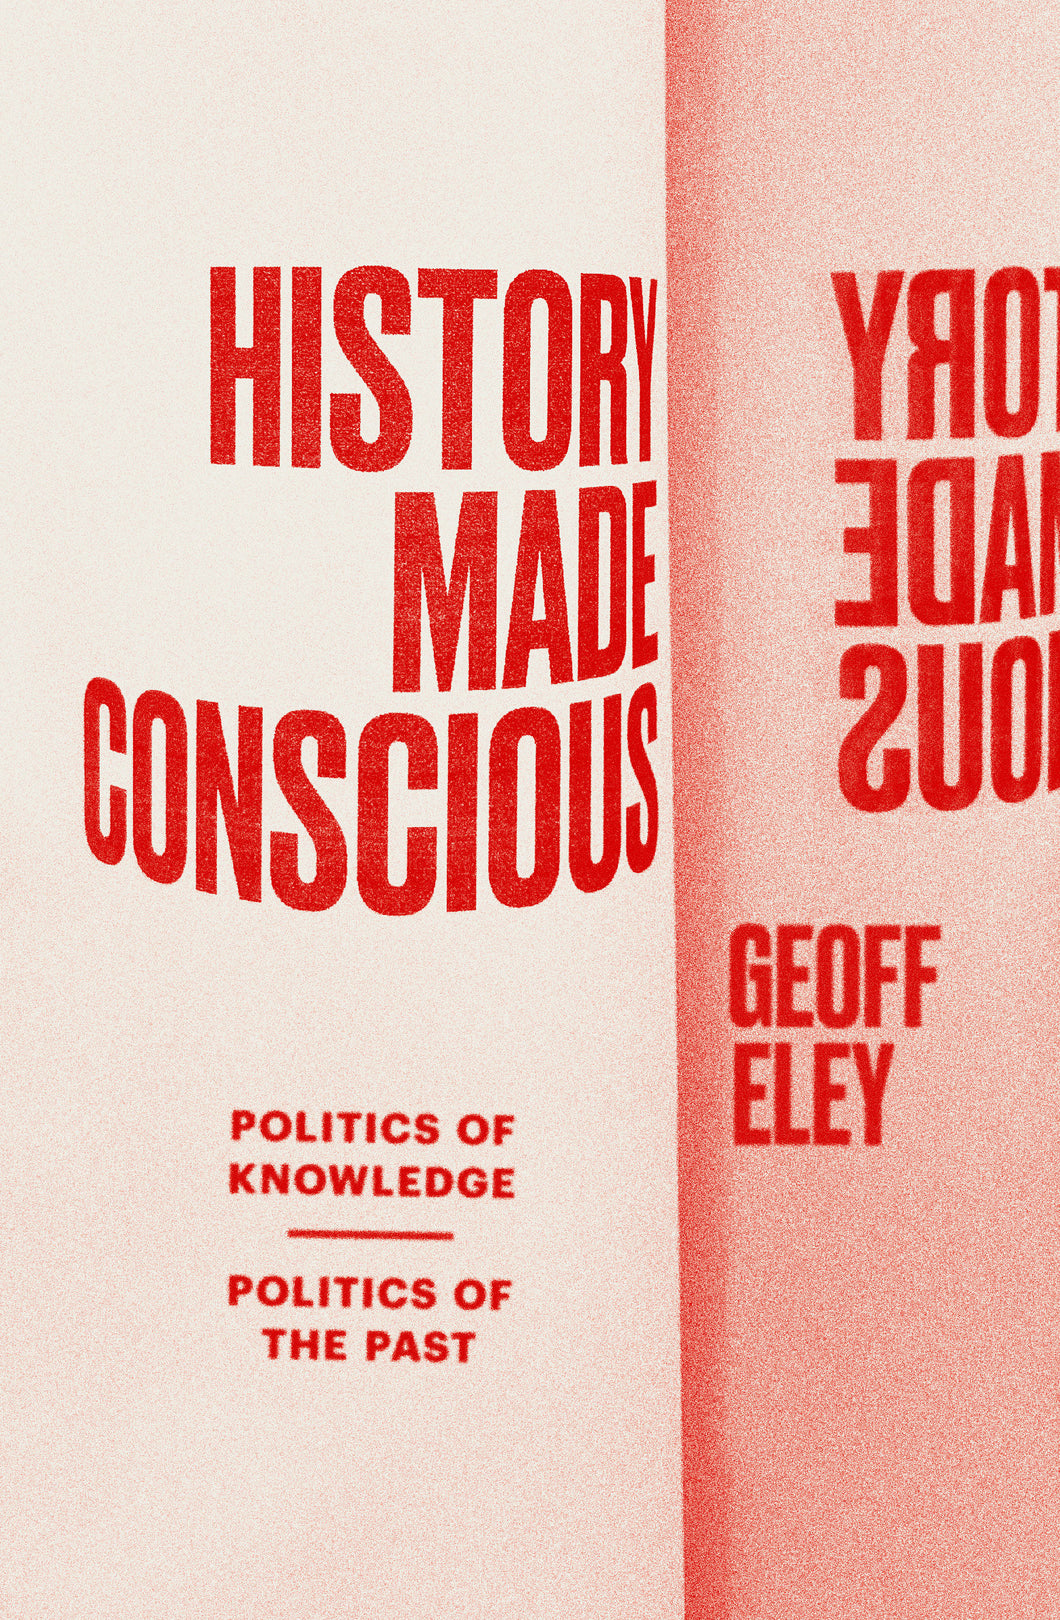 History Made Conscious: Politics of Knowledge, Politics of the Past ร้านหนังสือและสิ่งของ เป็นร้านหนังสือภาษาอังกฤษหายาก และร้านกาแฟ หรือ บุ๊คคาเฟ่ ตั้งอยู่สุขุมวิท กรุงเทพ